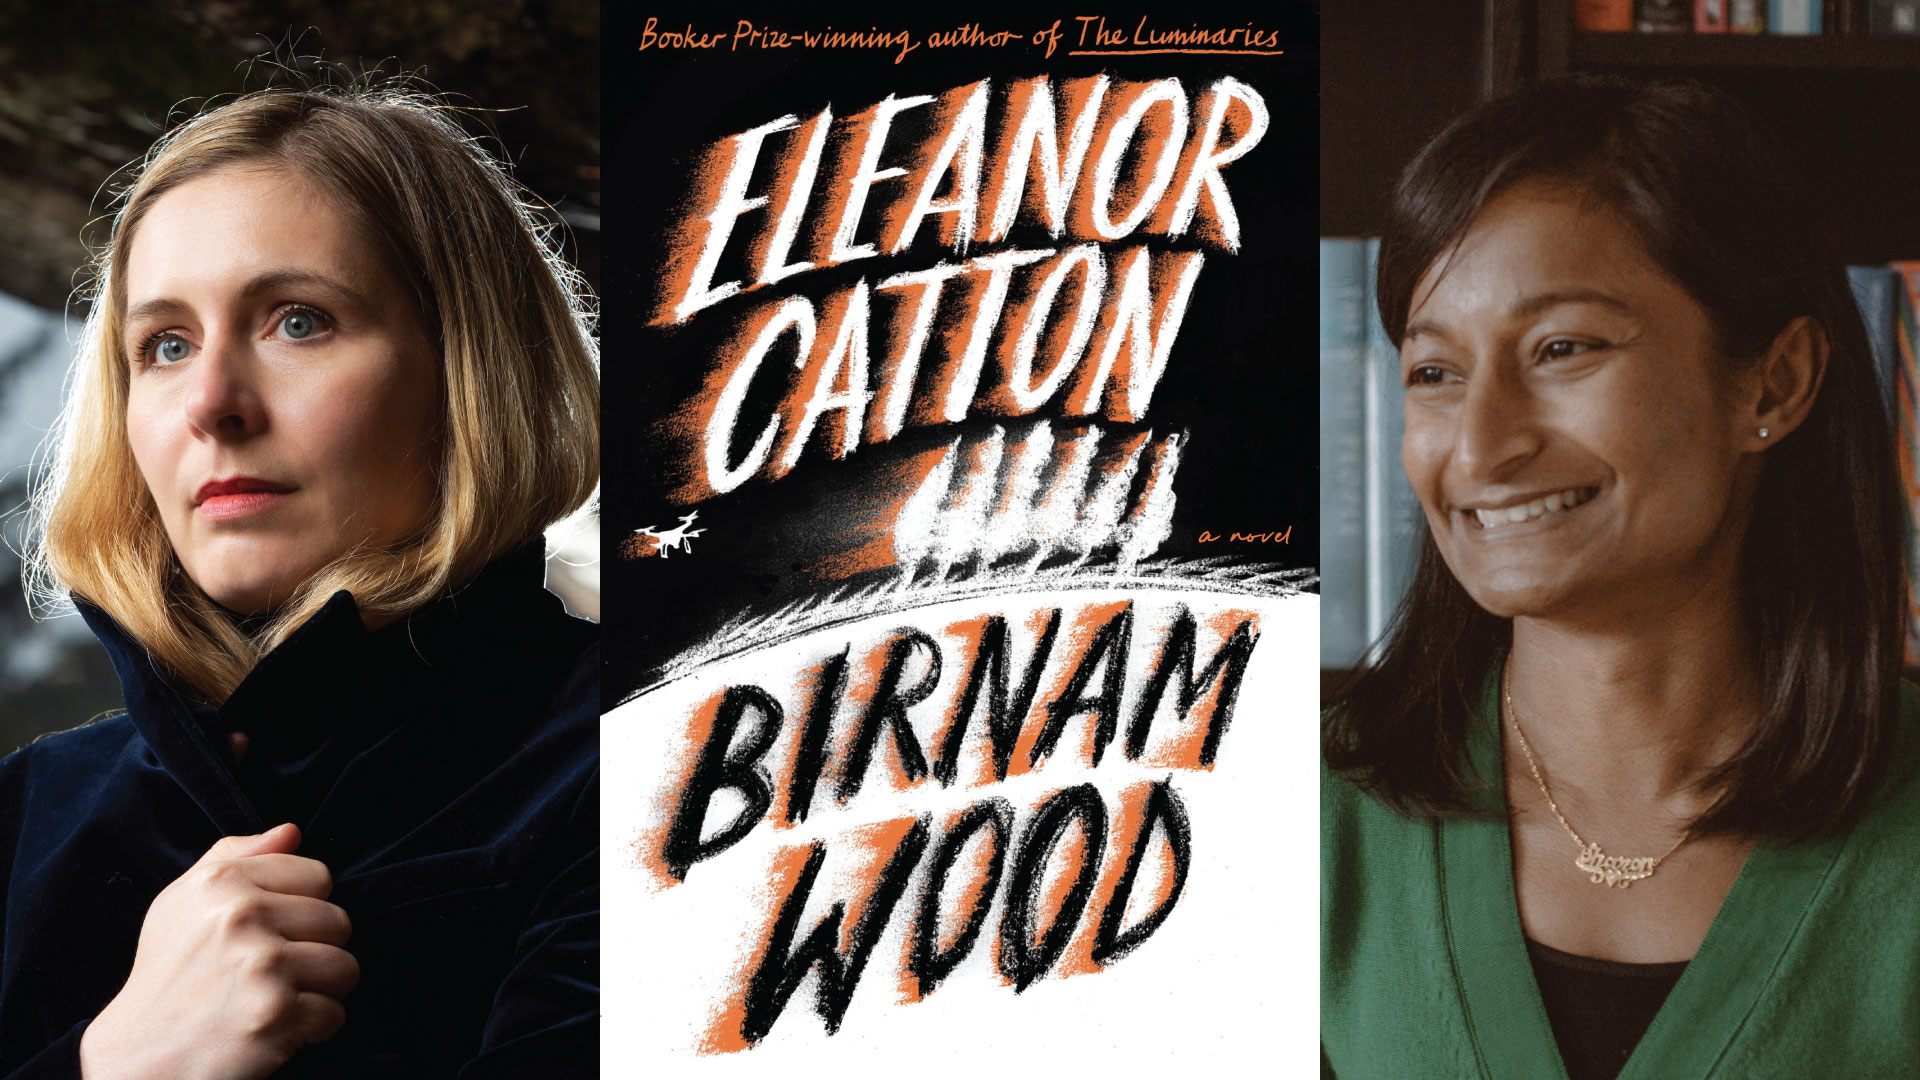 [Video] The Giller Book Club: Birnam Wood